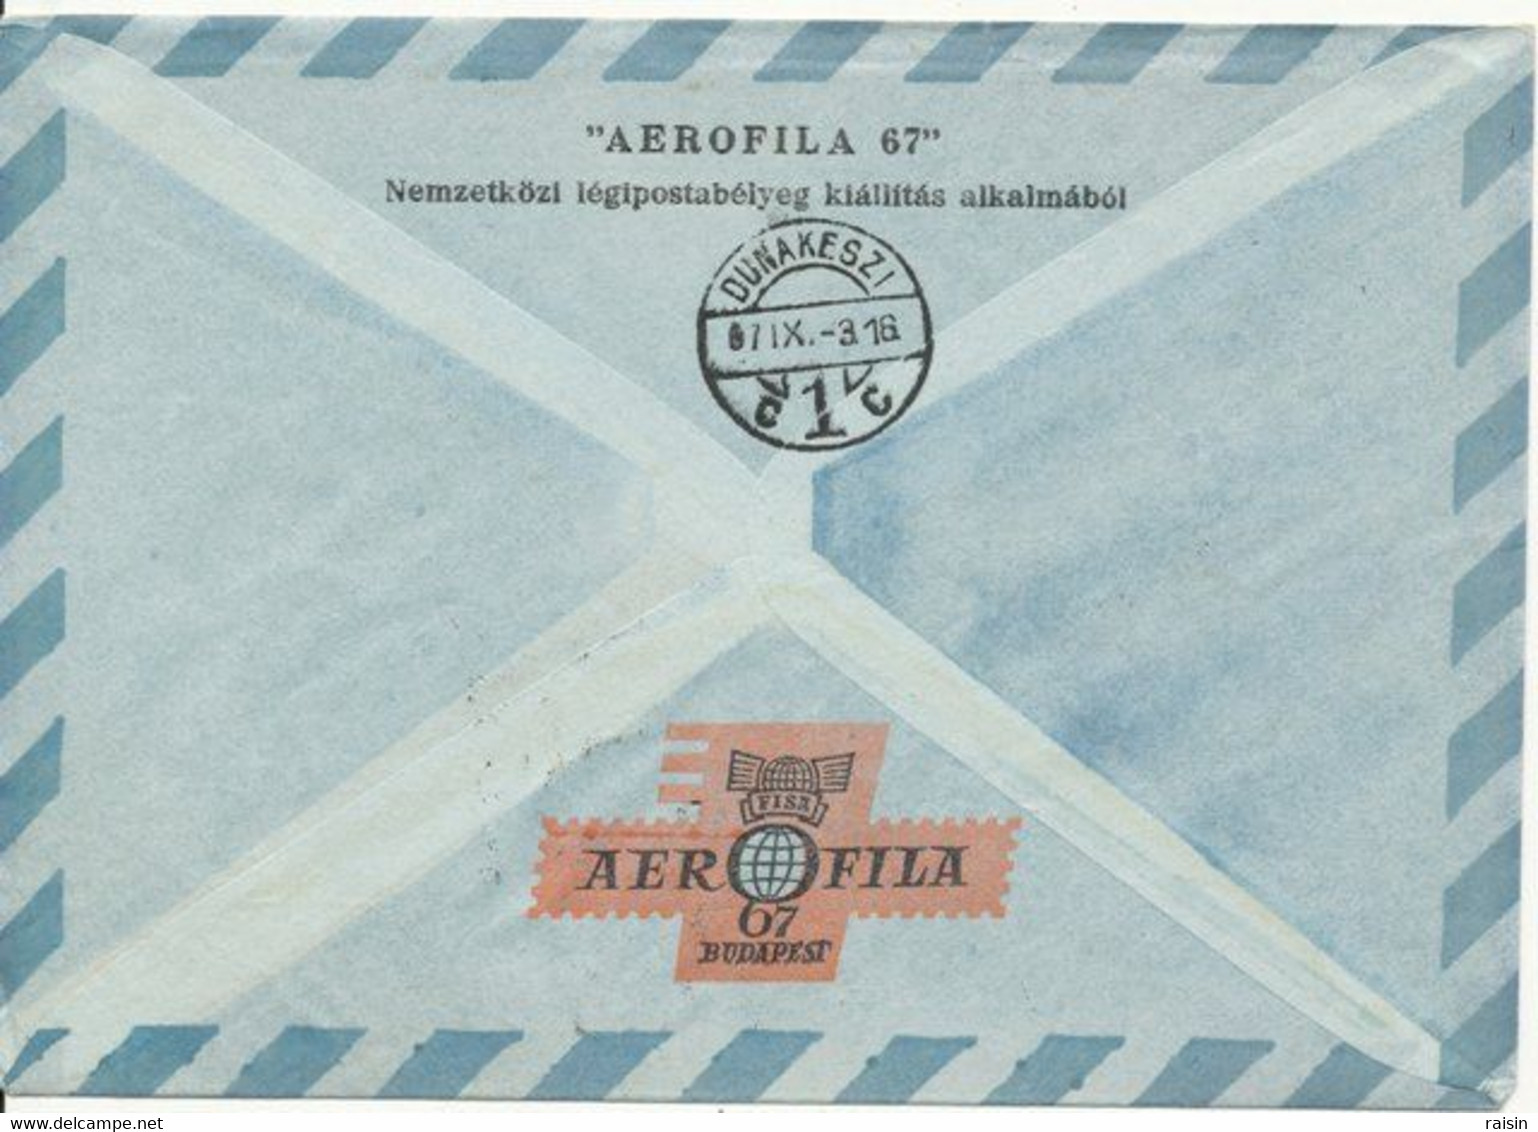 Hongrie 1967 "AEROFILA 67" Lettre Ayant Circulé Par Ballon N° 9787 TBE - Storia Postale